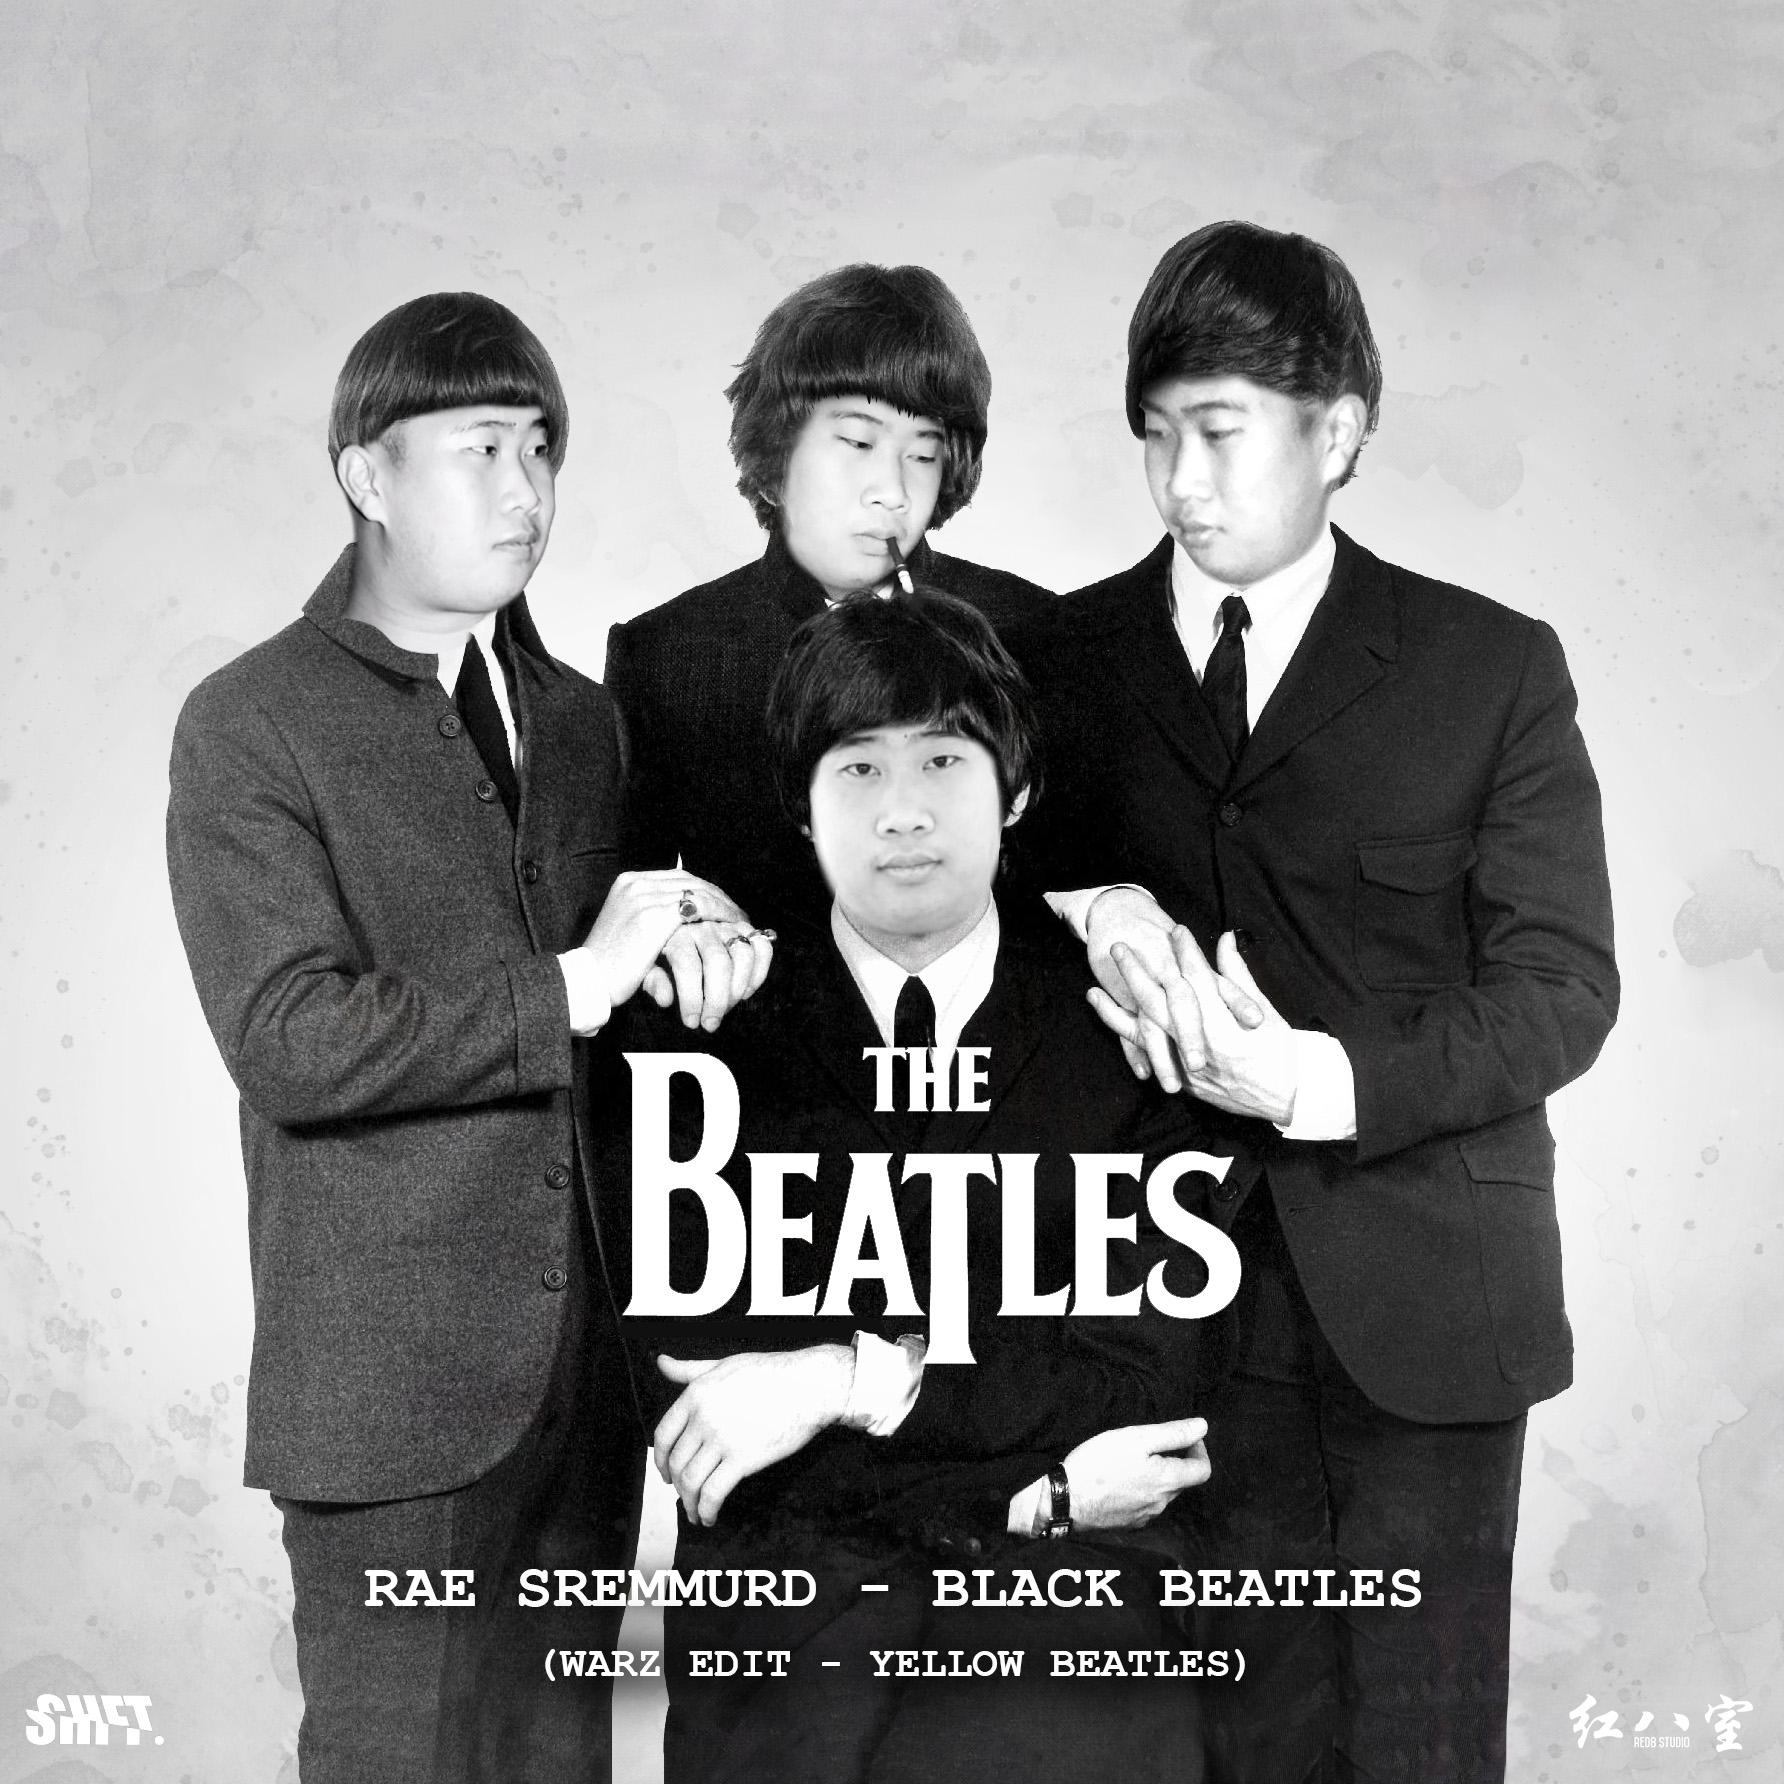 Black Beatles(Warz Edit - Yellow Beatles)